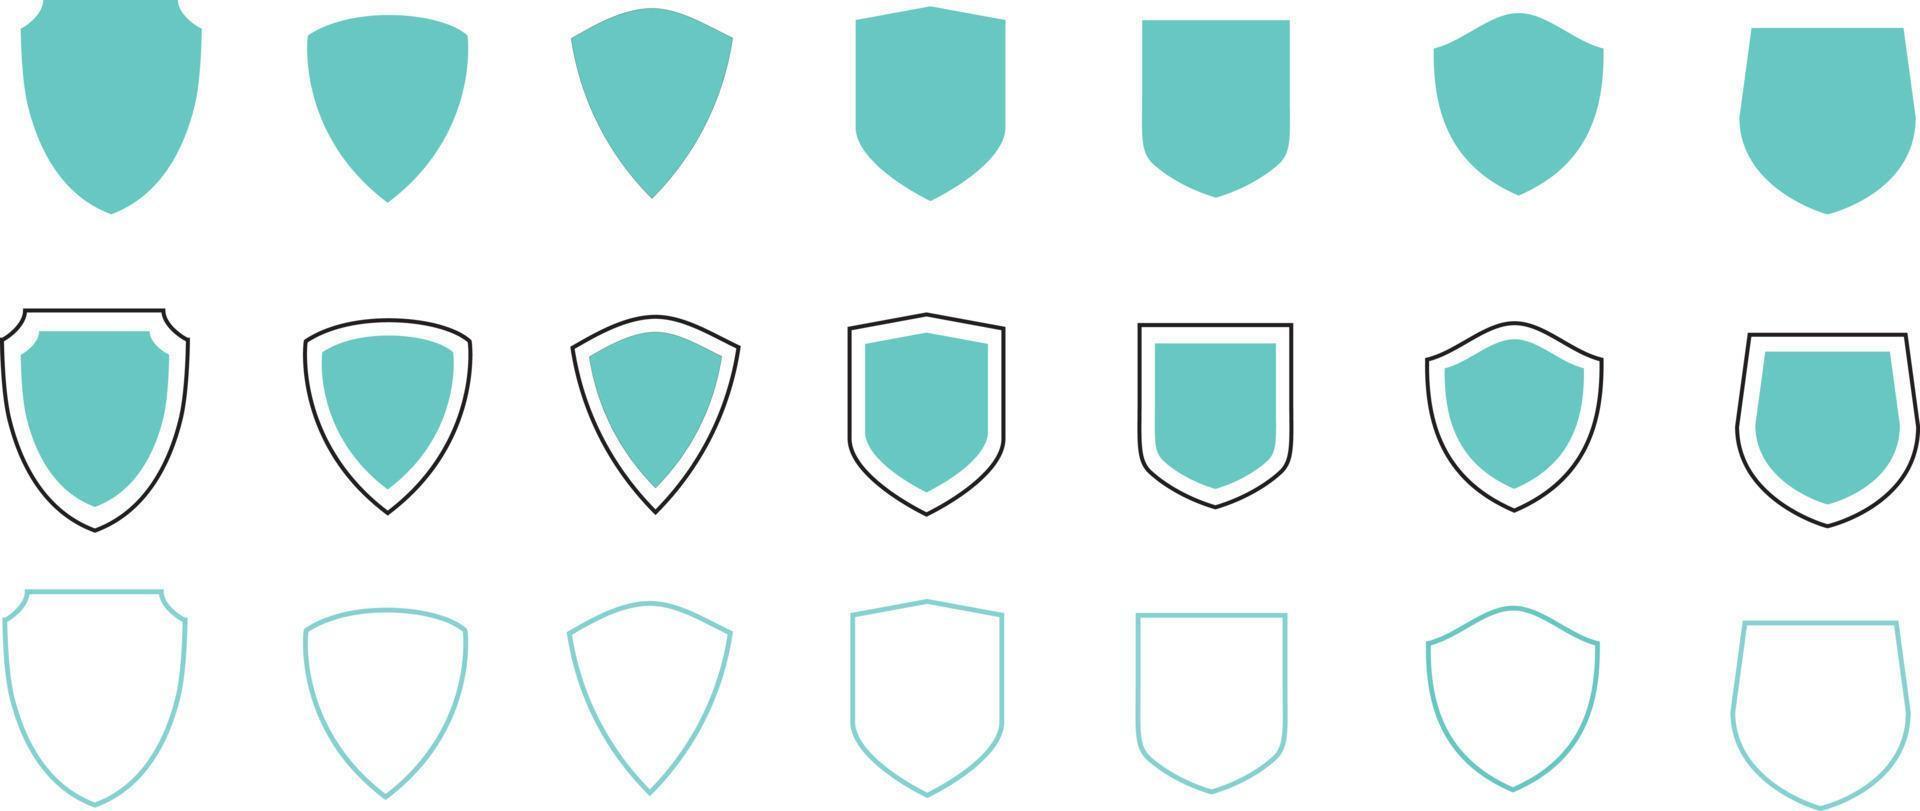 Shields vector coat arms set signs symbols stickers design elements